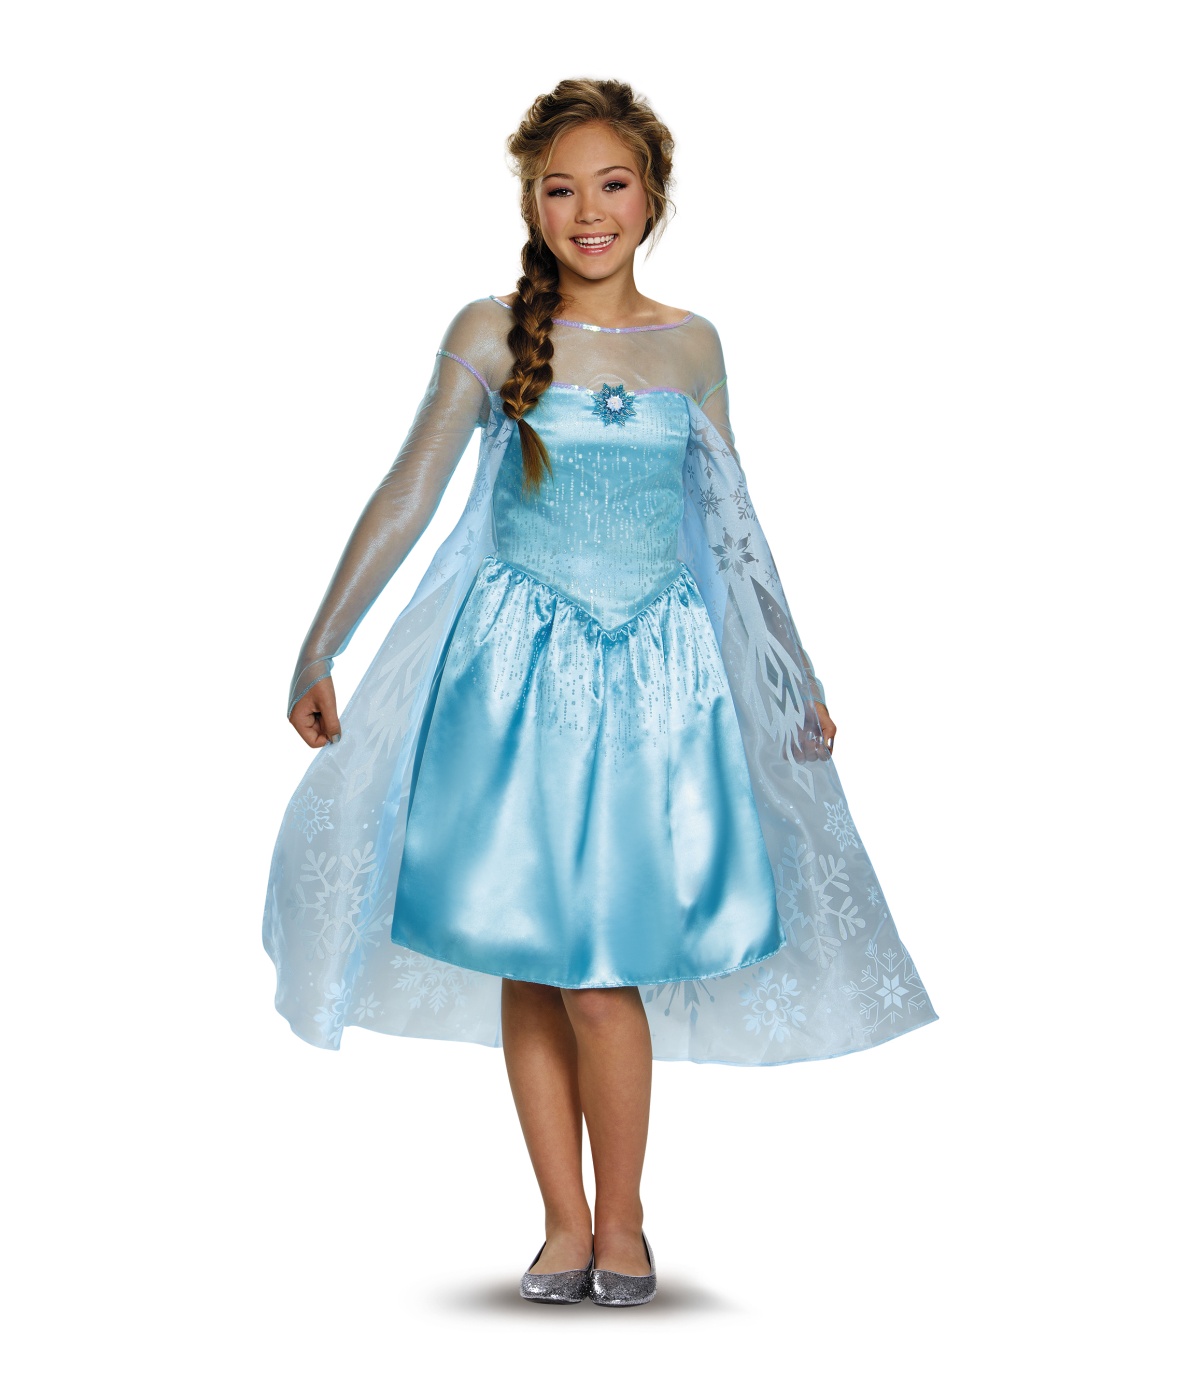  Girls Frozen Elsa Disney Costume